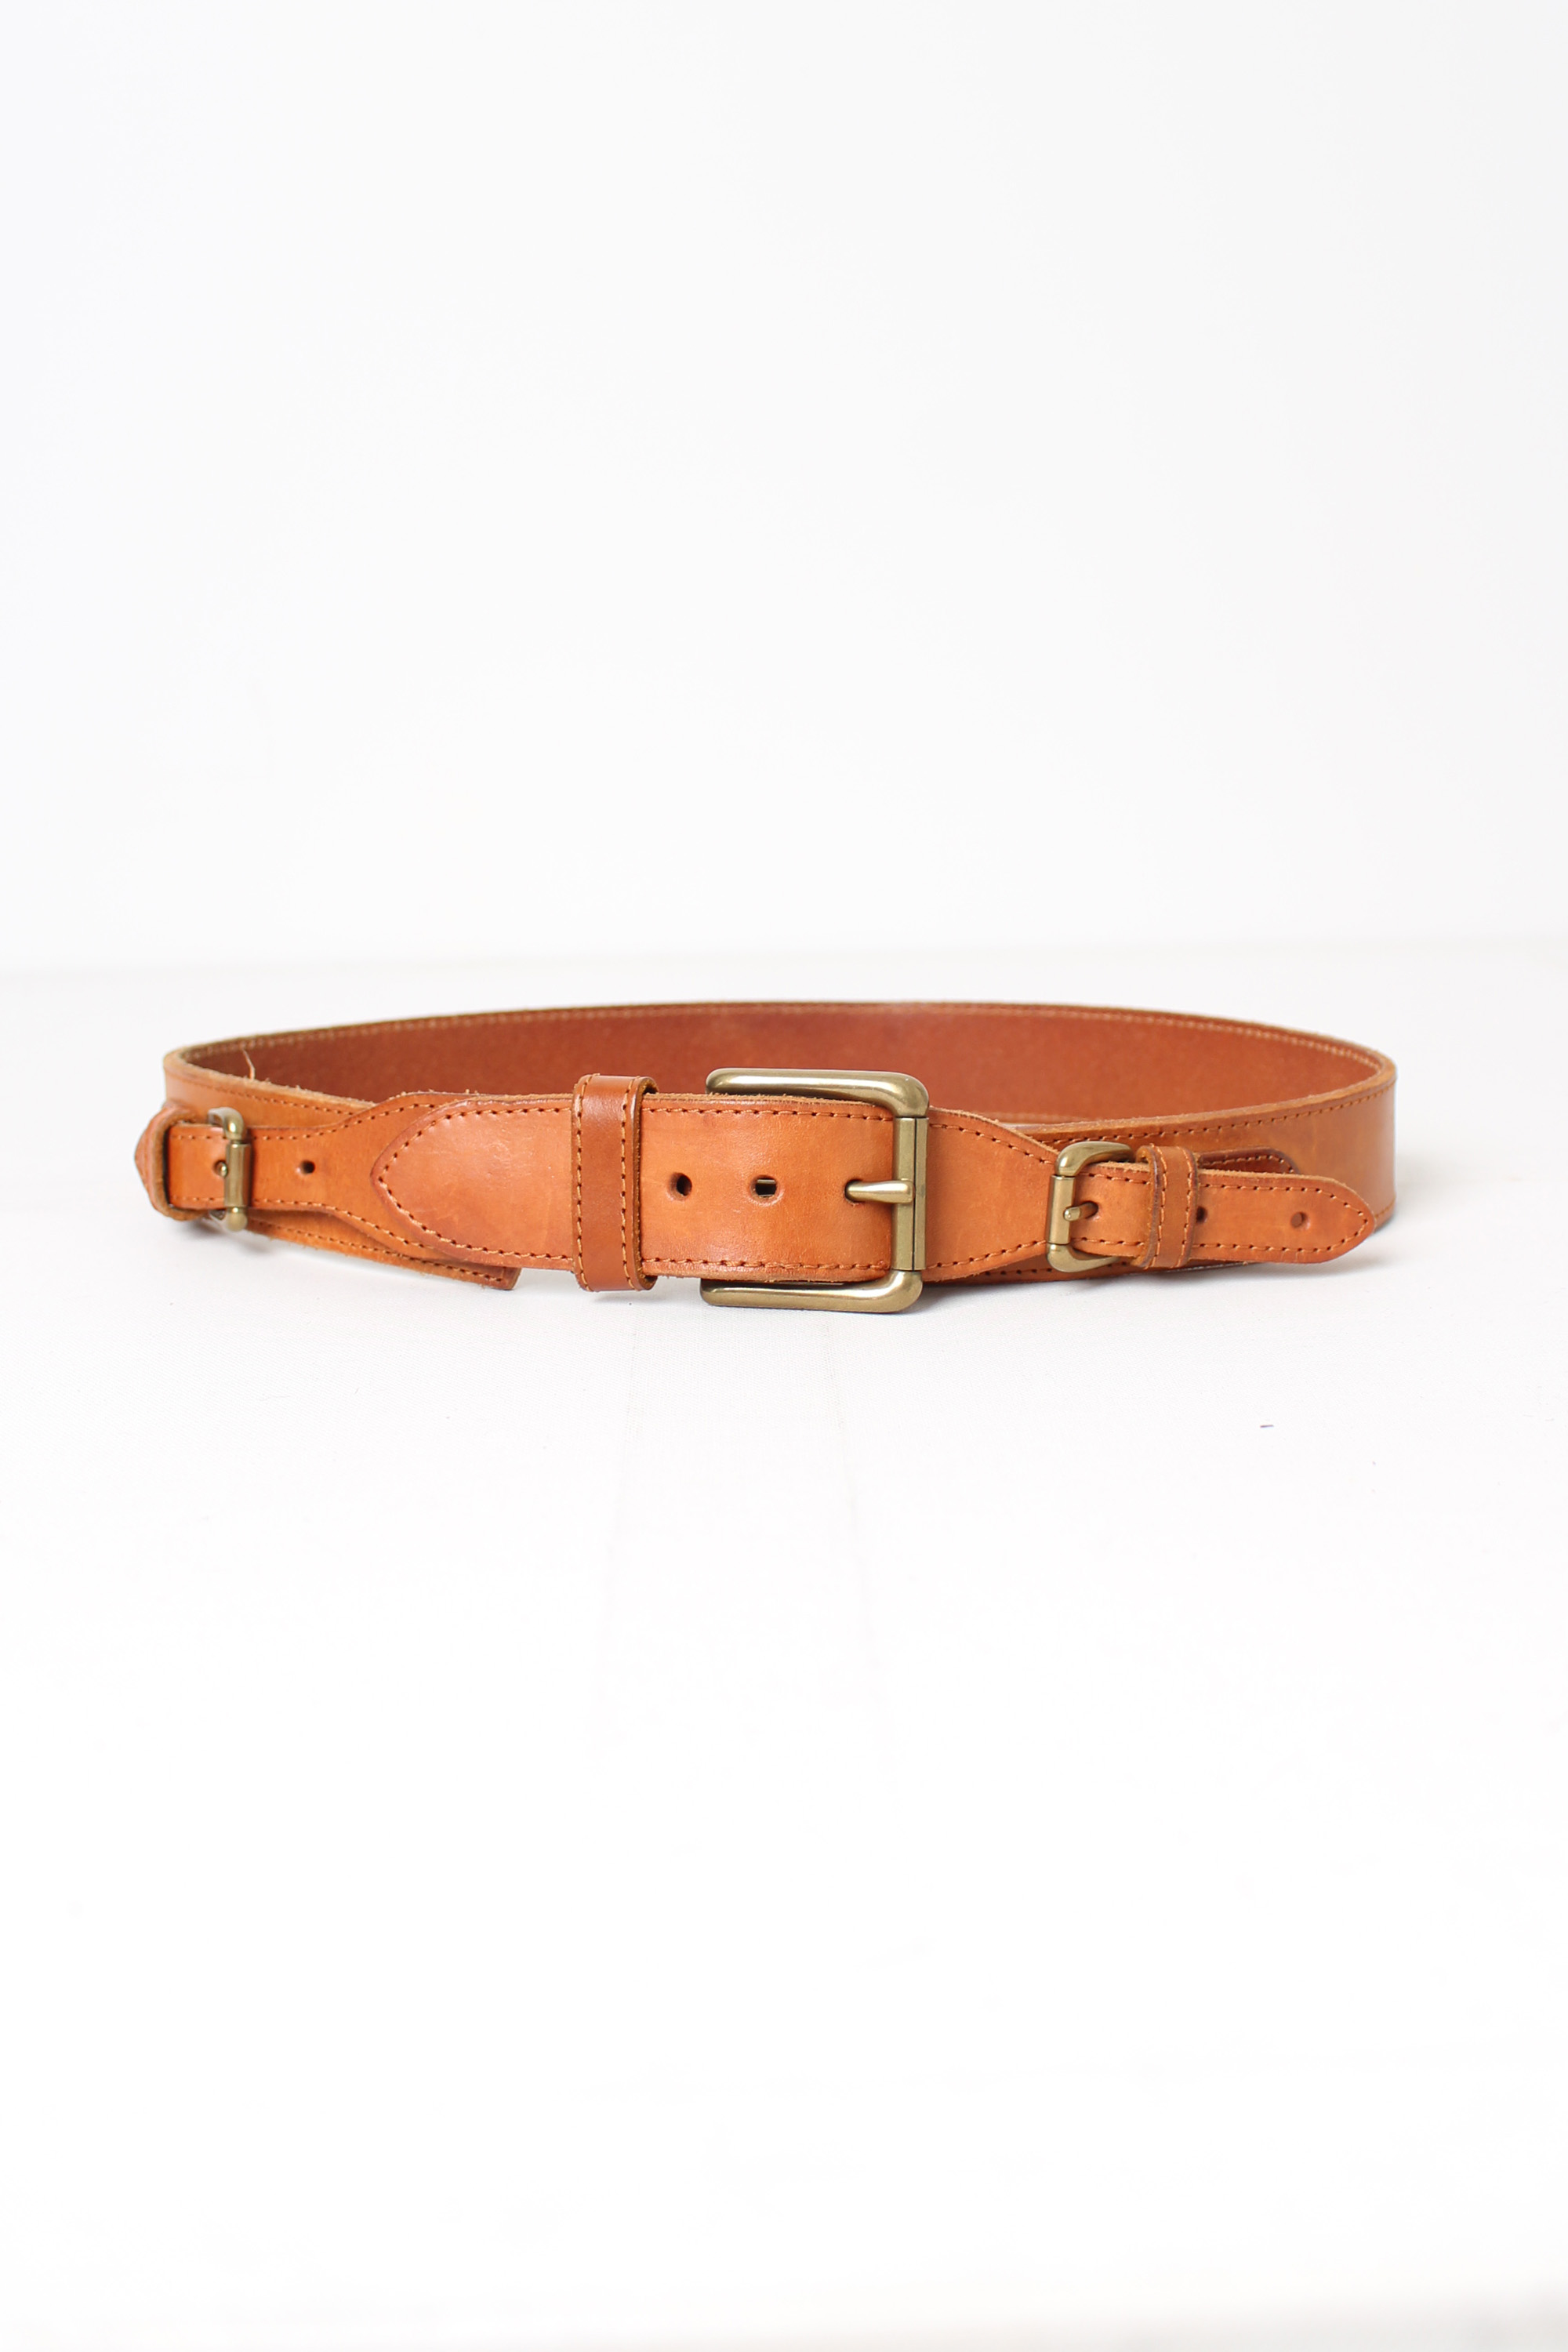 GAP leather belt